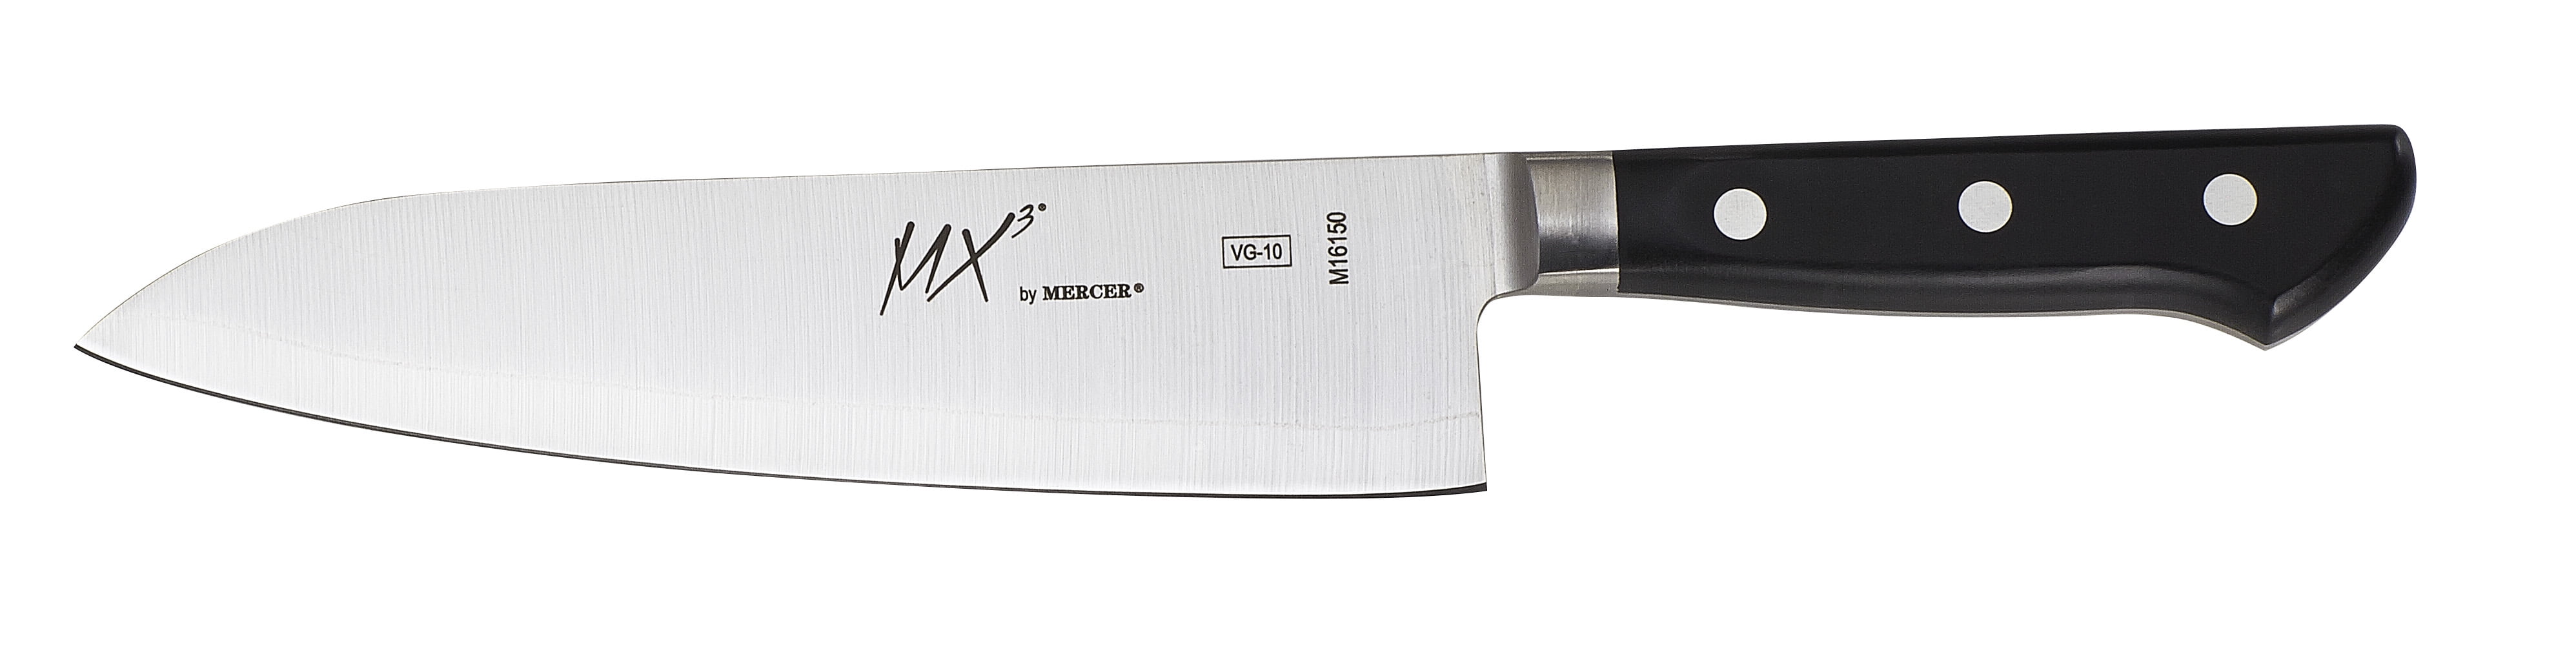 Mercer M16150 Culinary MX3 Premium San MAI VG-10 Steel Core Blade, 185mm, 7-Inch, Santoku Knife